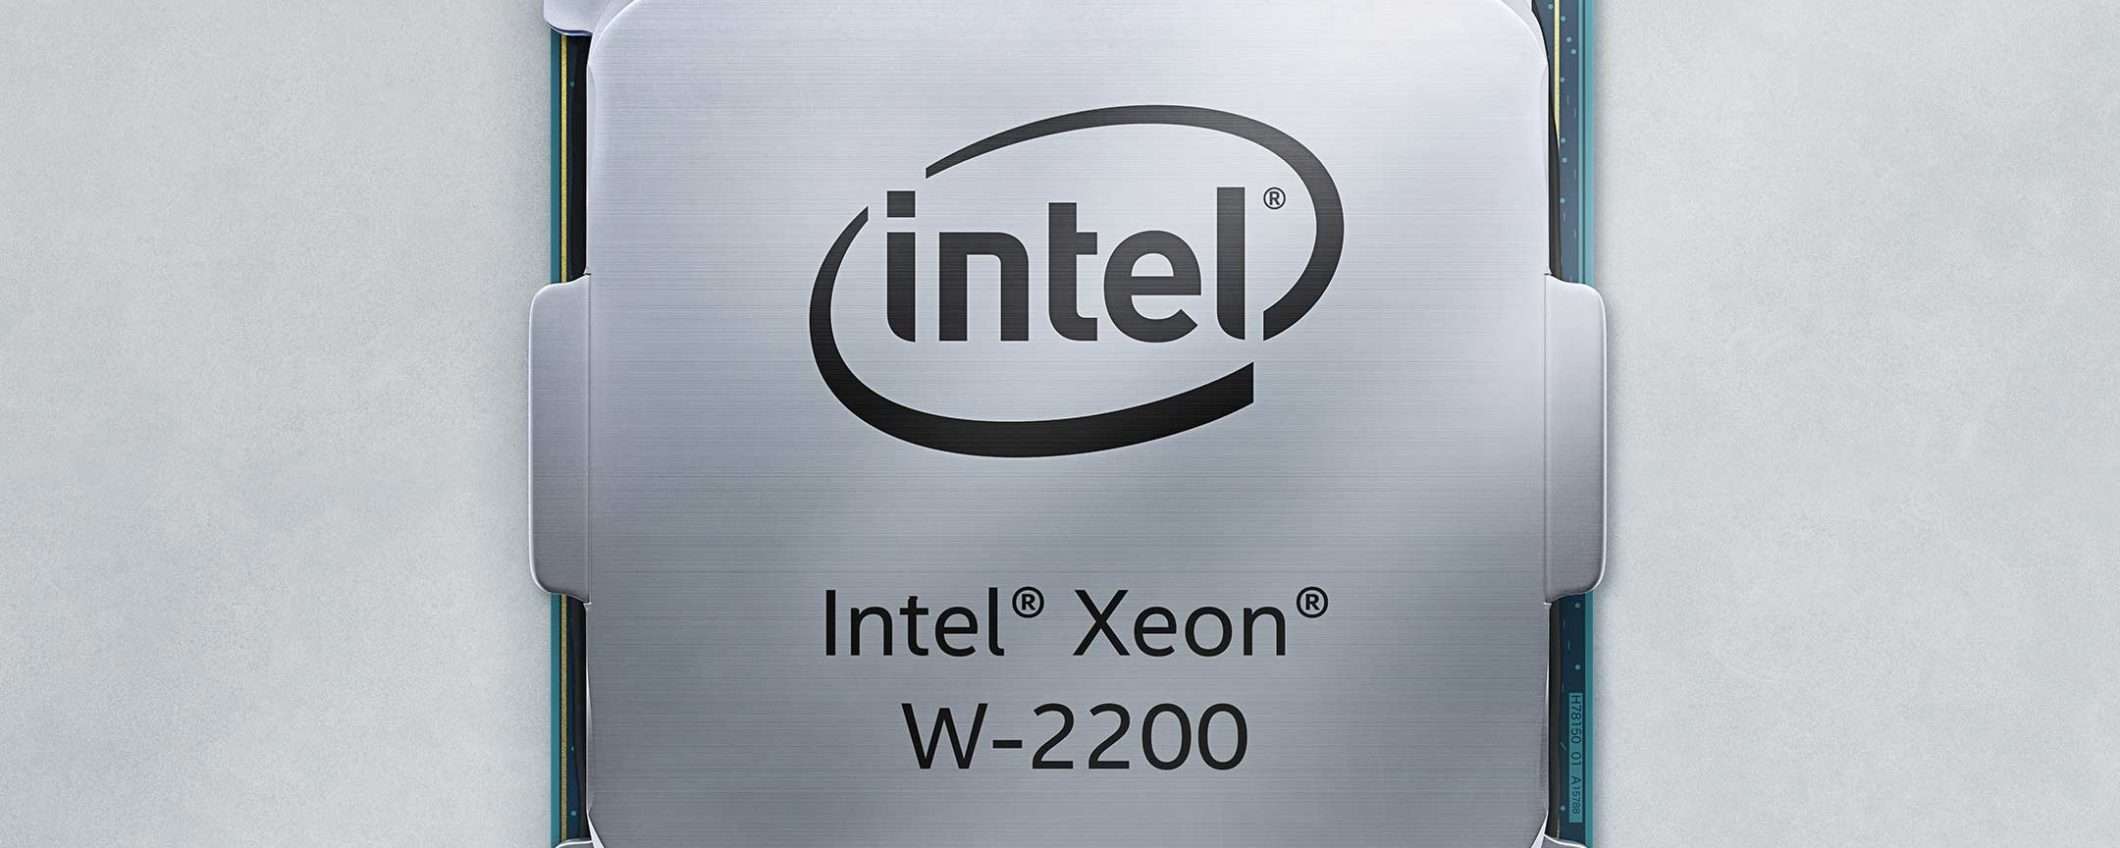 Intel: nuove CPU per Xeon serie W e Core serie X